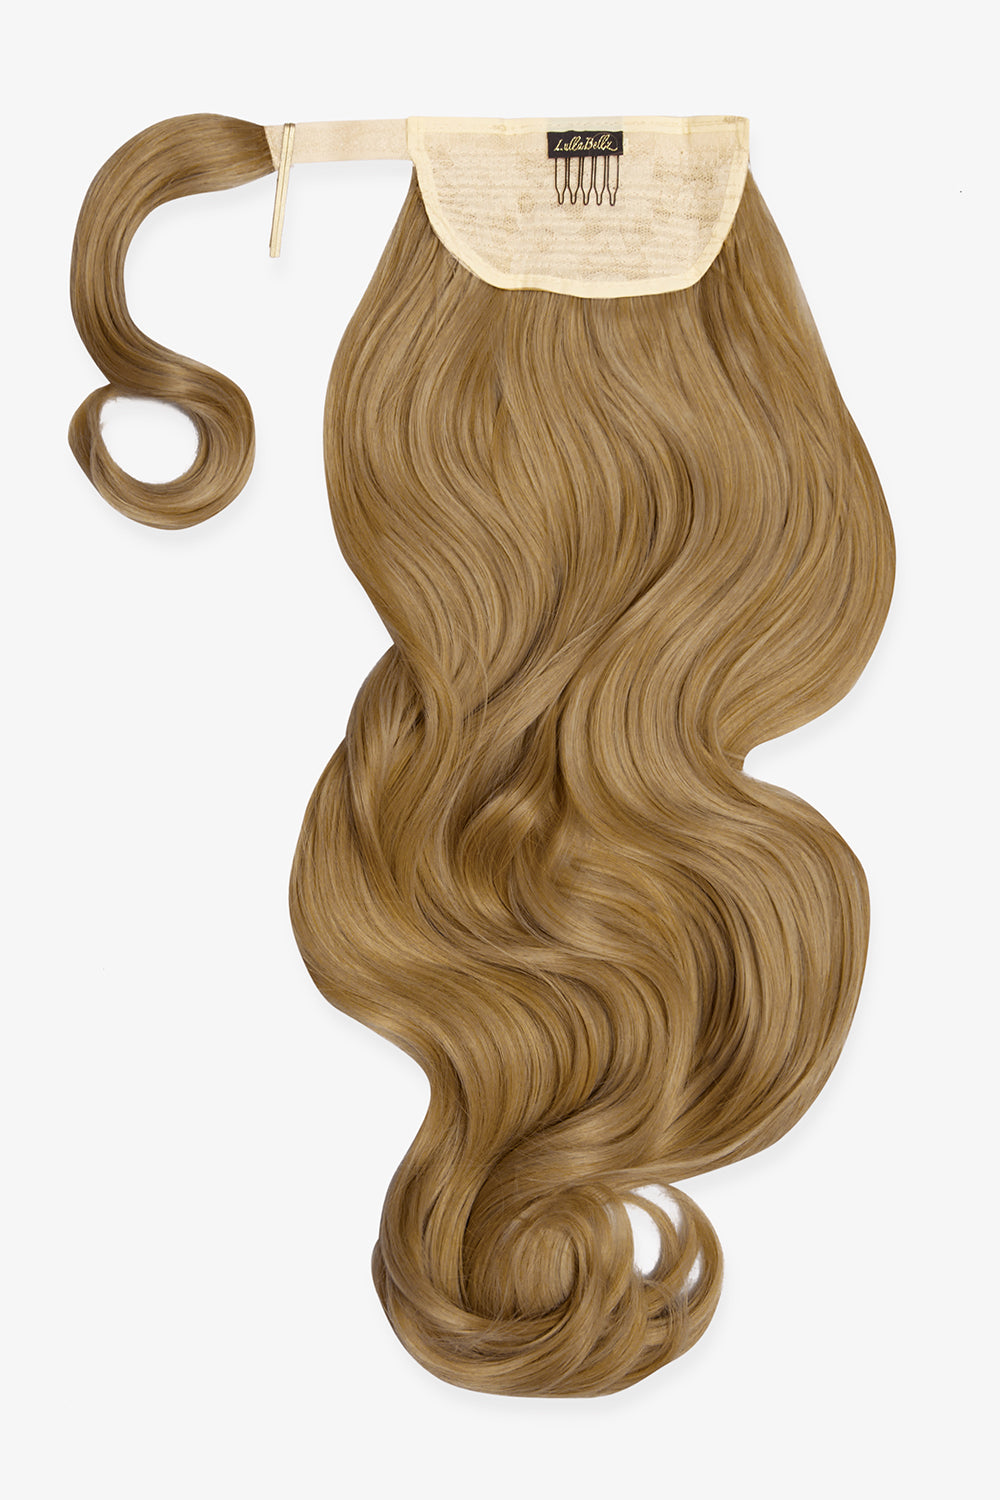 Grande 26" Blow Dry Wraparound Pony - Harvest Blonde Festival Hair Inspiration